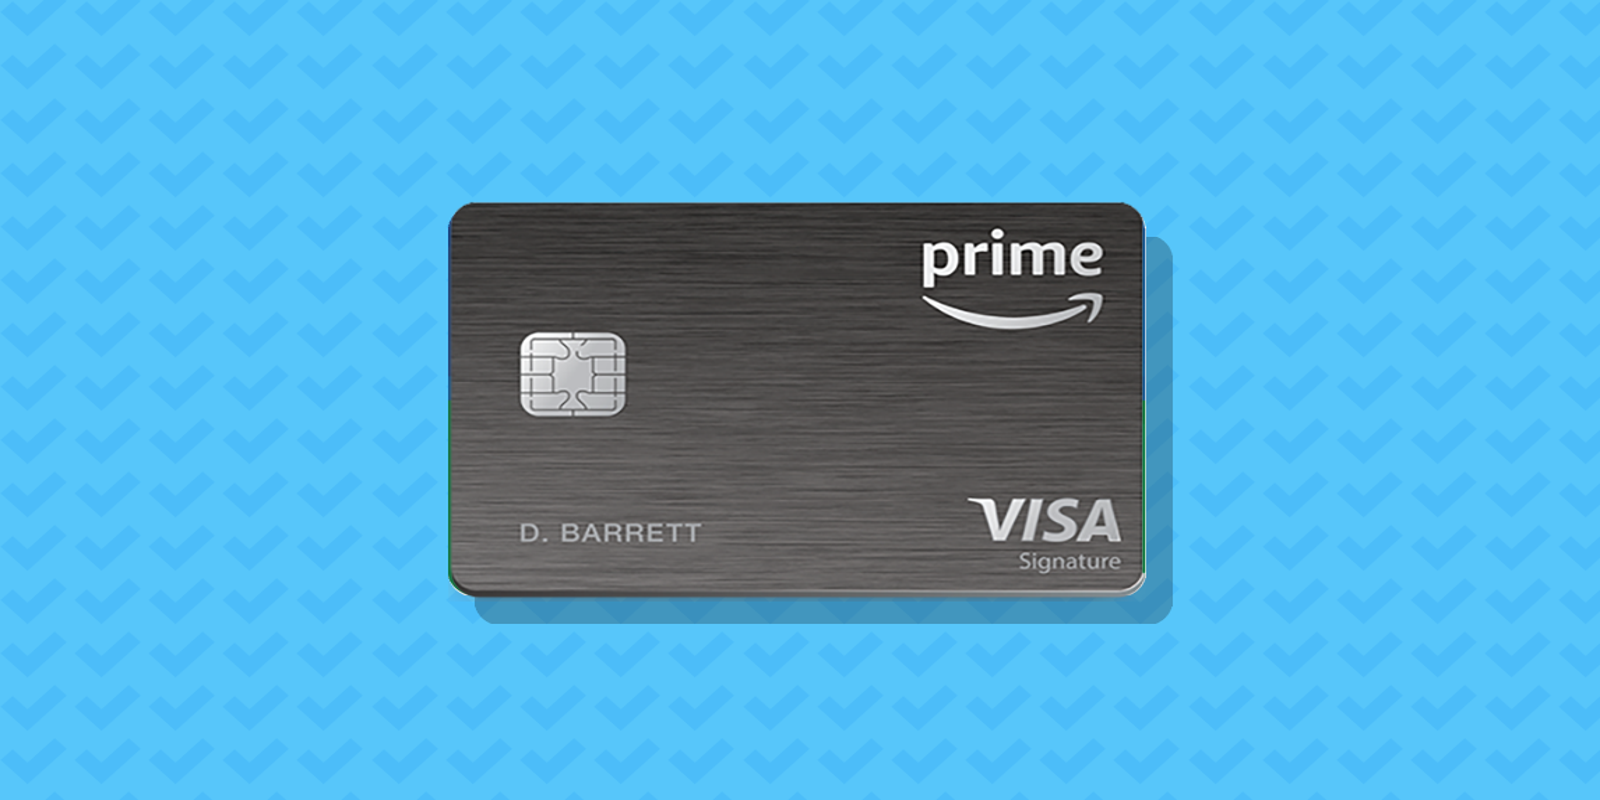 Prime Day 2020: Save more with the Amazon Prime Rewards Visa Signature